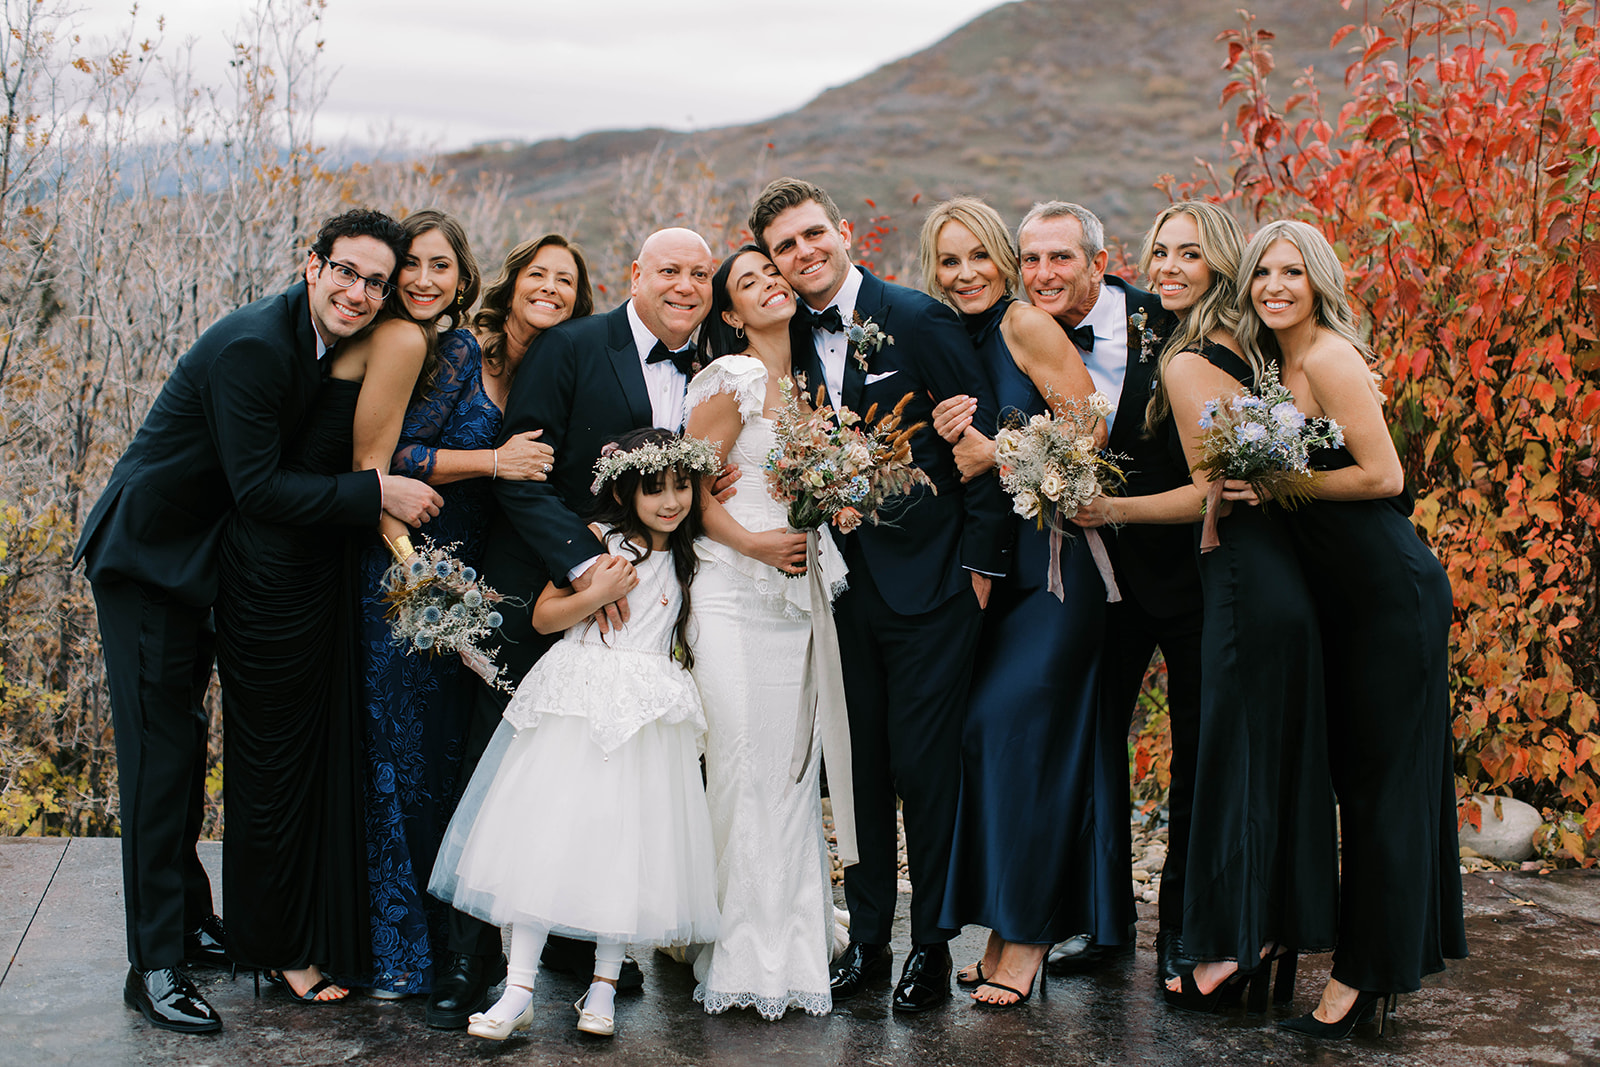 family photo taken at a wedding at blue sky ranch in utah. photo taken by megan robinson photography